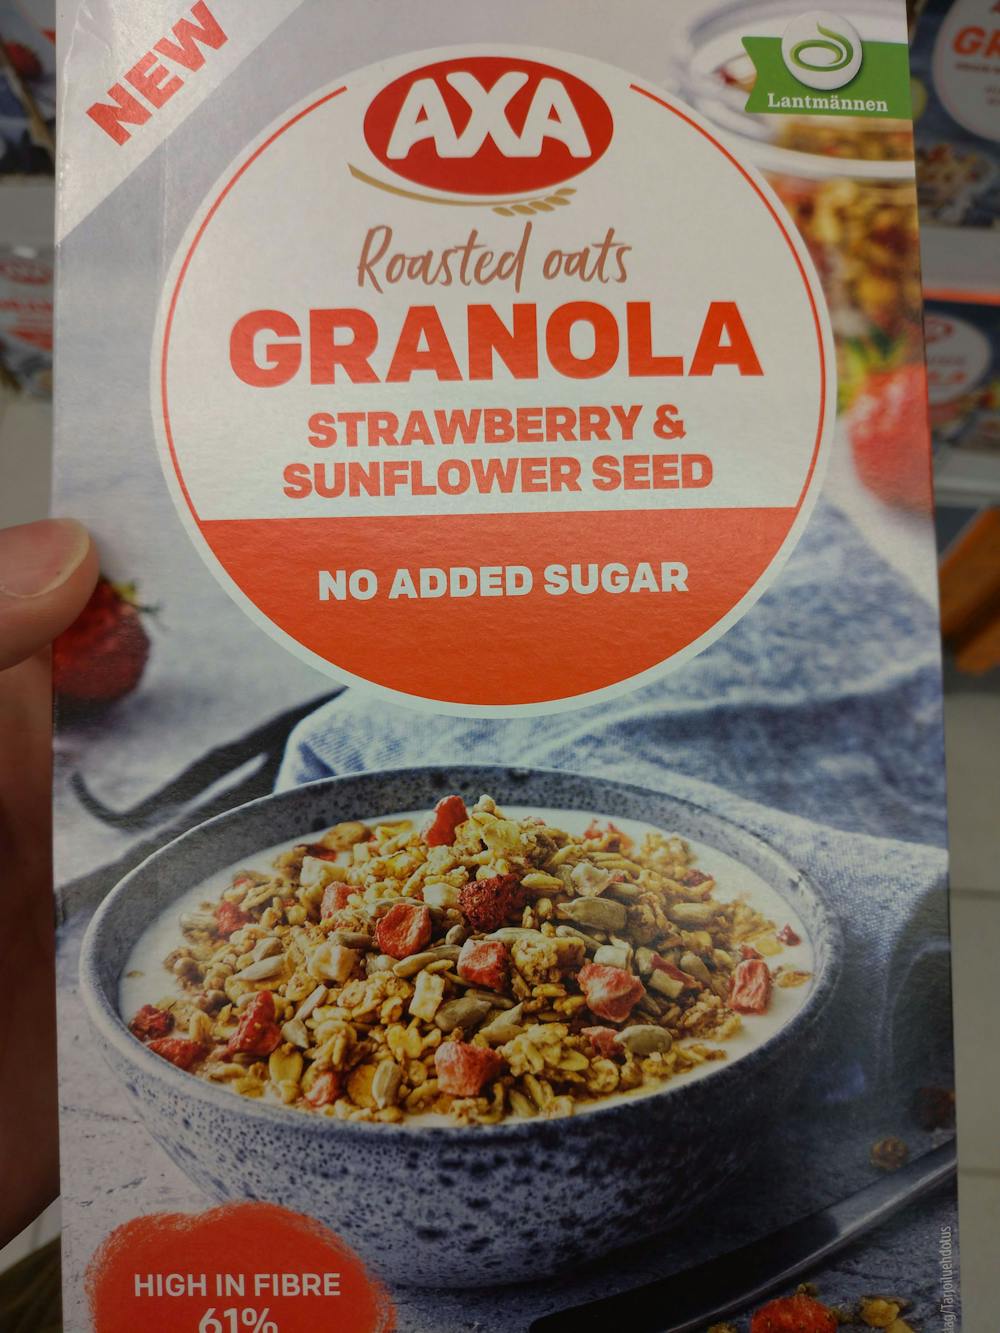 Granola, strawberry & sunflower seeds, AXA